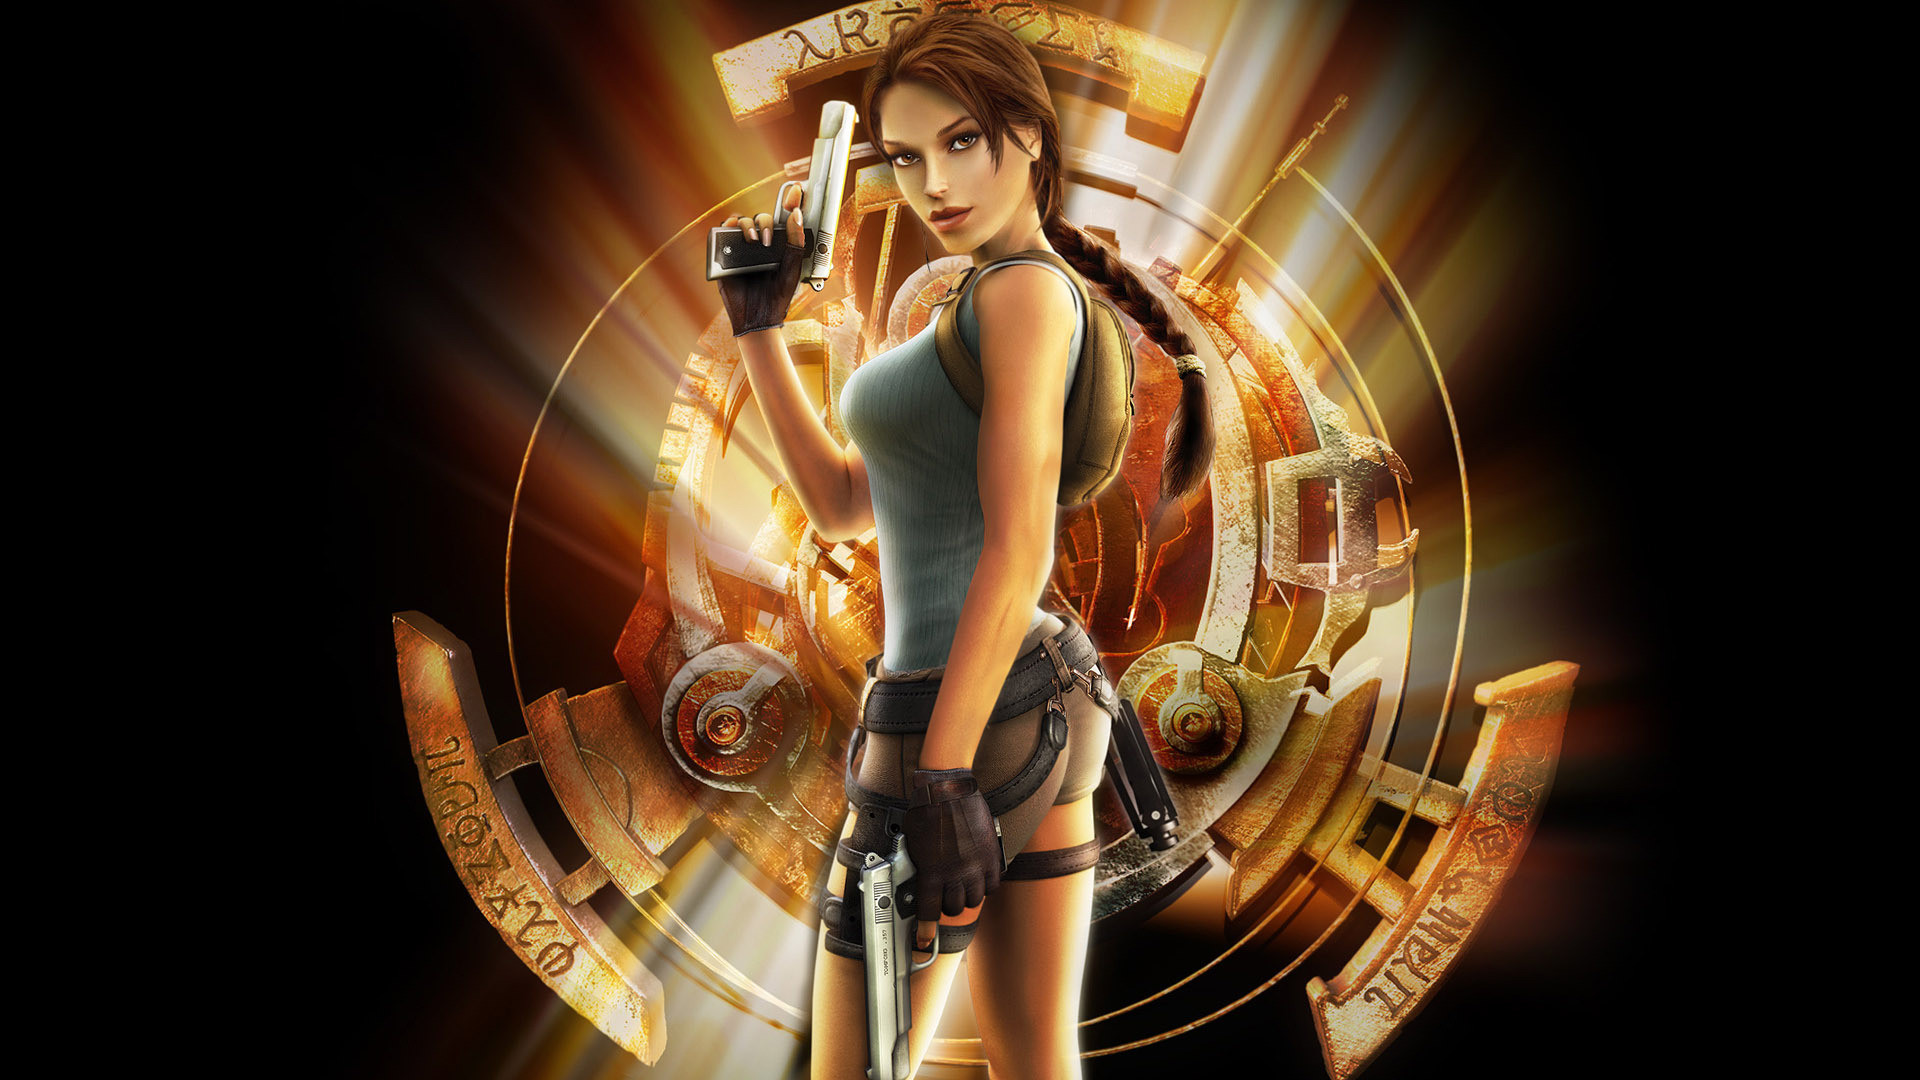 1920x1080 Tomb Raider images Lara Croft HD wallpaper and background photos